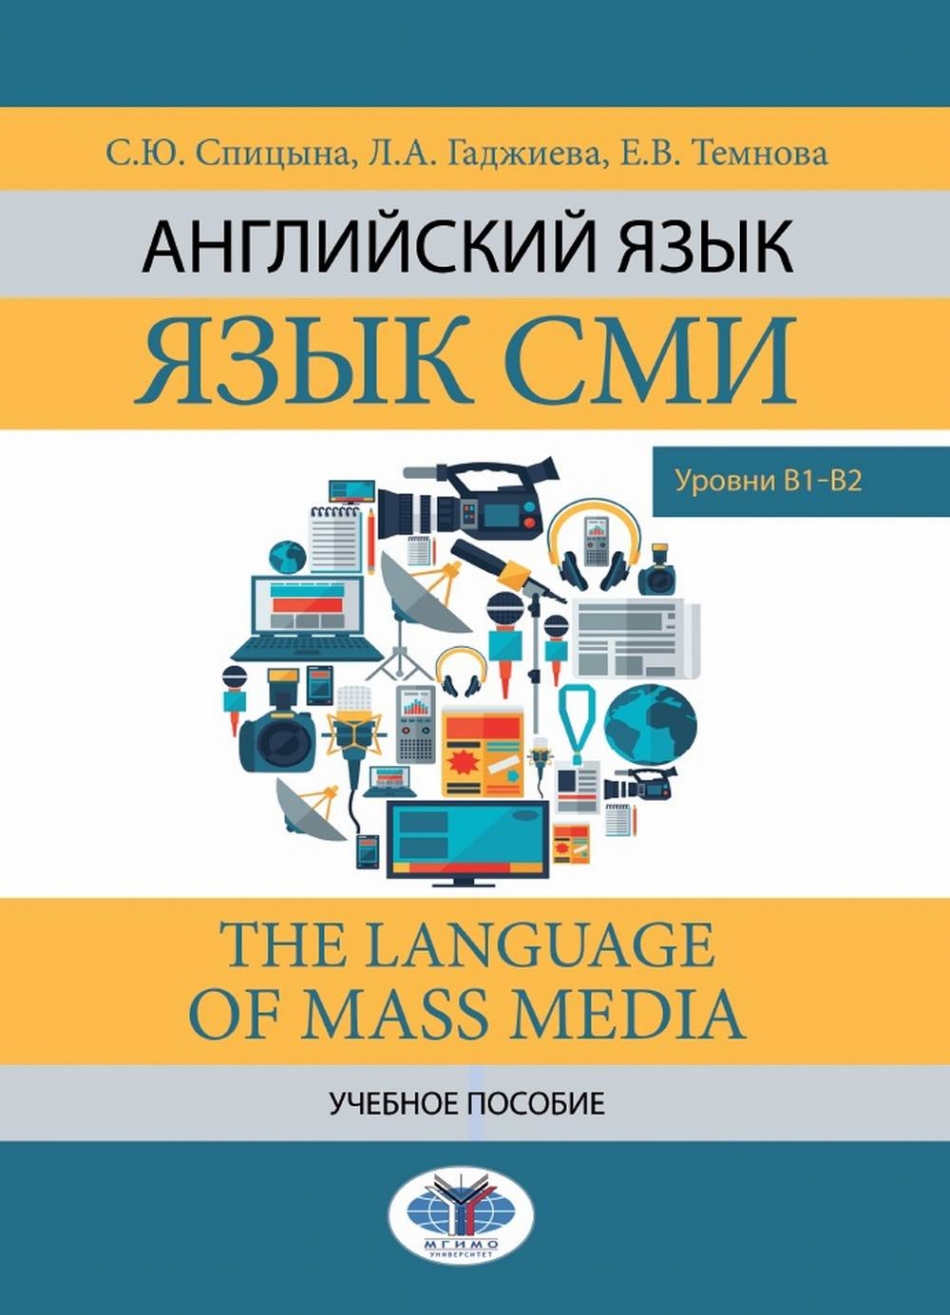  ..,  ..,  ..  .   /  The Language of mass media.  1-2 